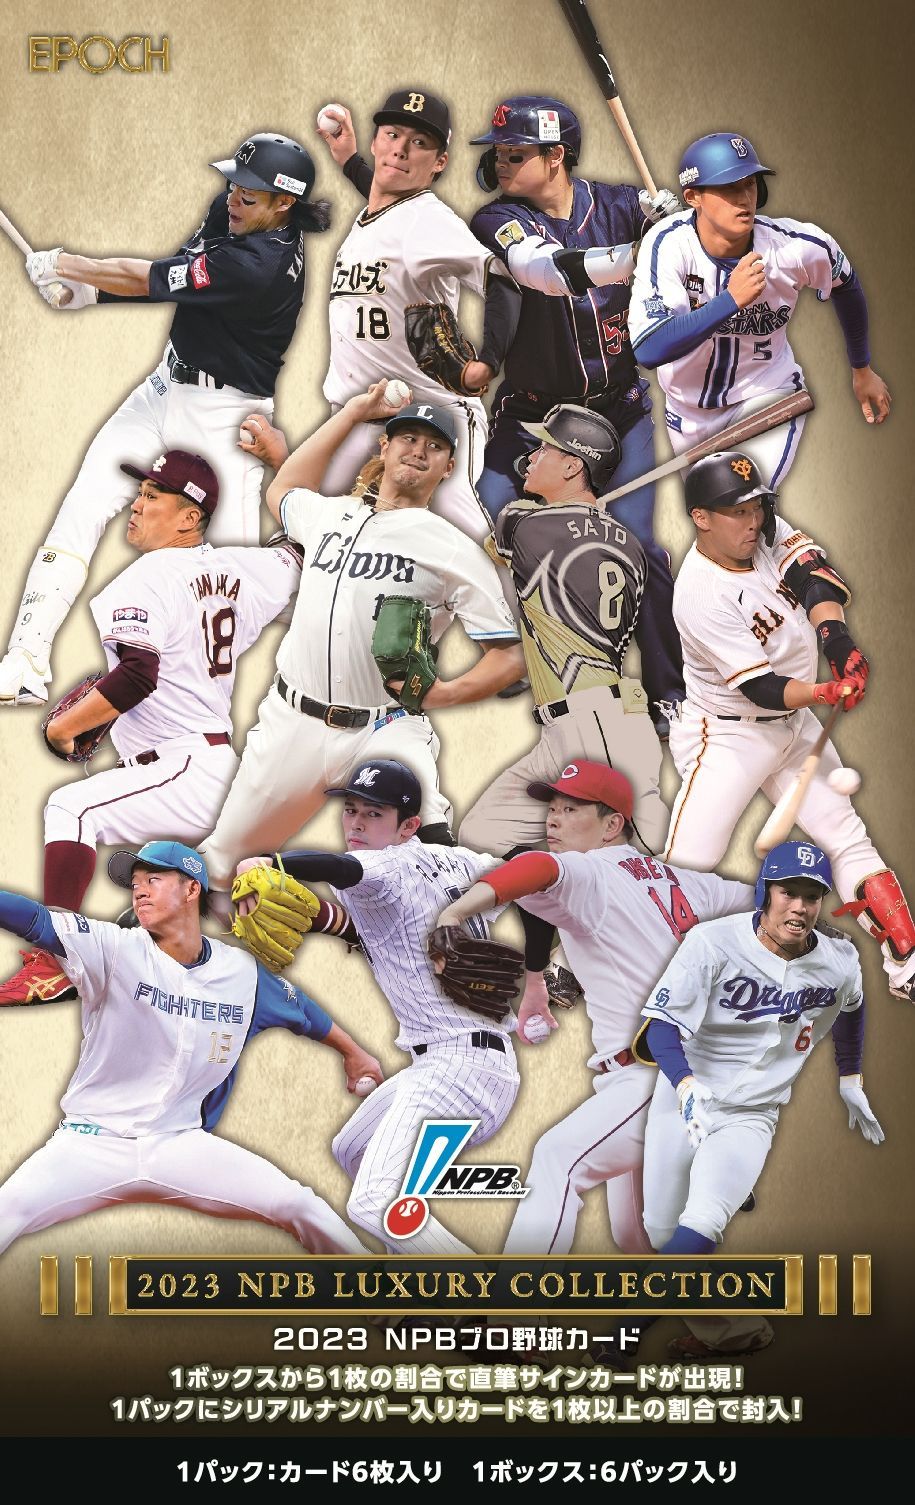 TOPPS MLB 2023野球カード シリアルナンバー付 - スポーツ選手